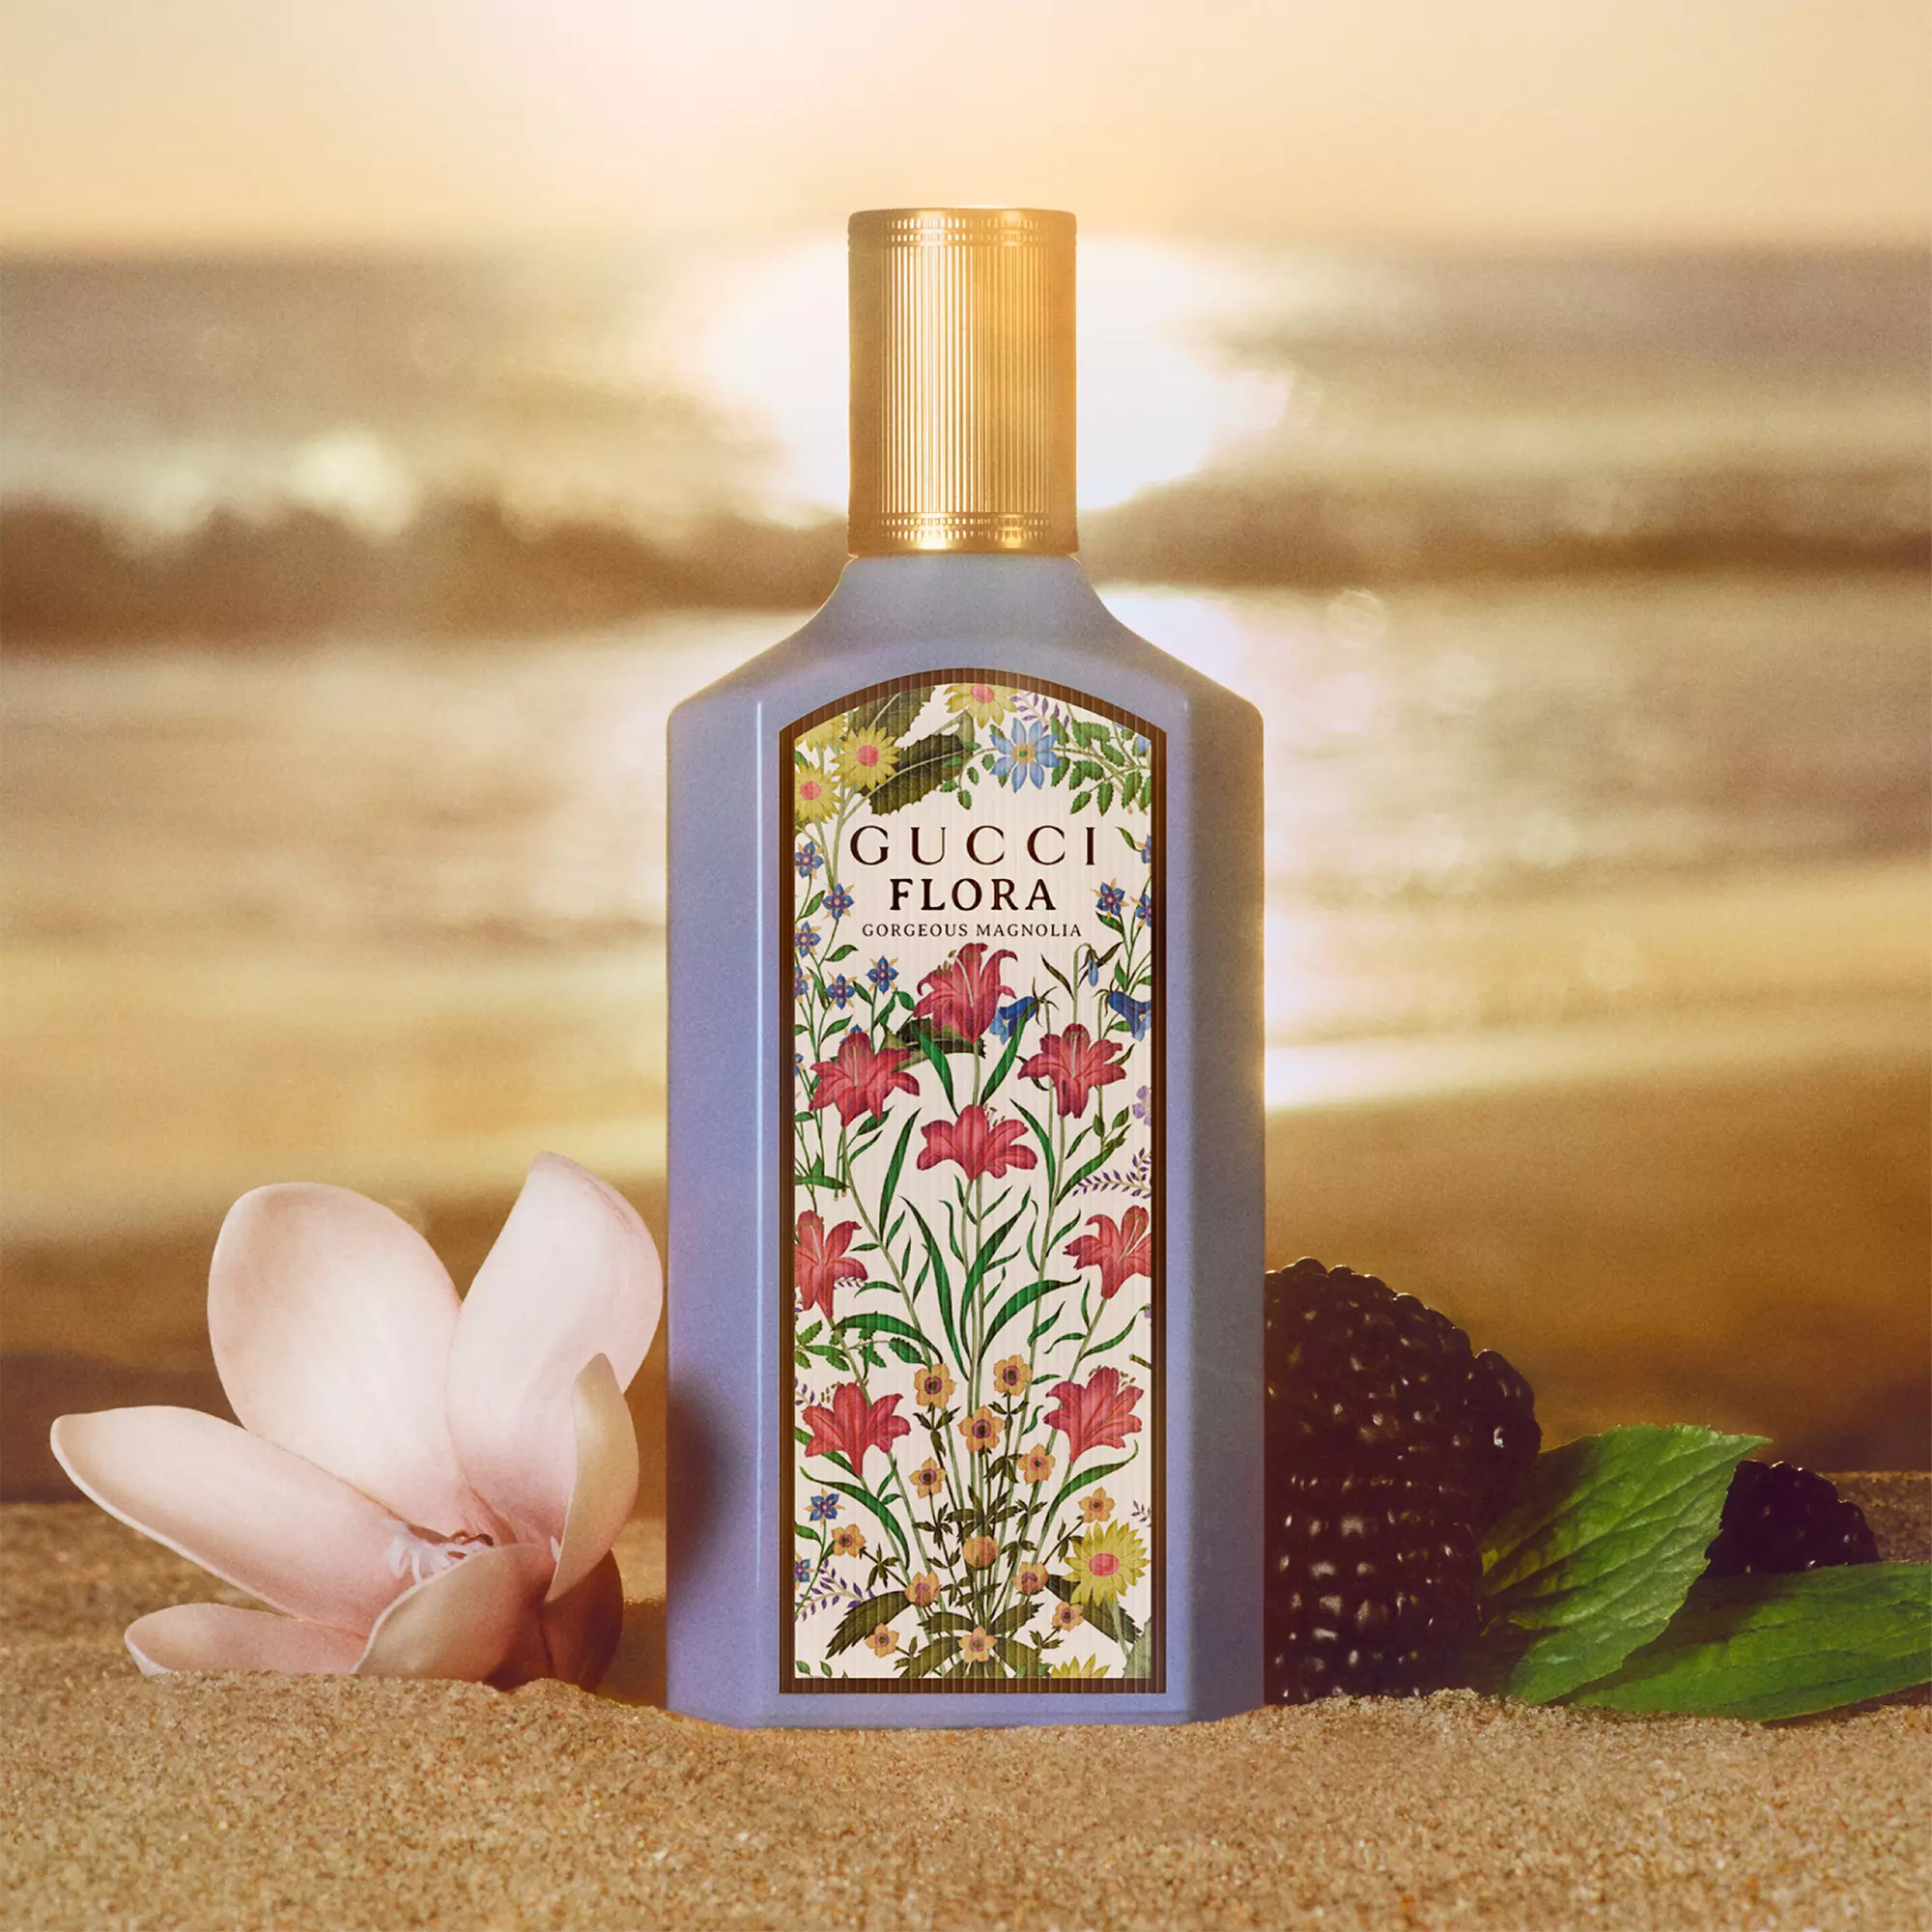 Perfume Gucci Flora Gorgeous Magnolia EDP (W) / 100 ml - 3616303470791- Prive Perfumes Honduras